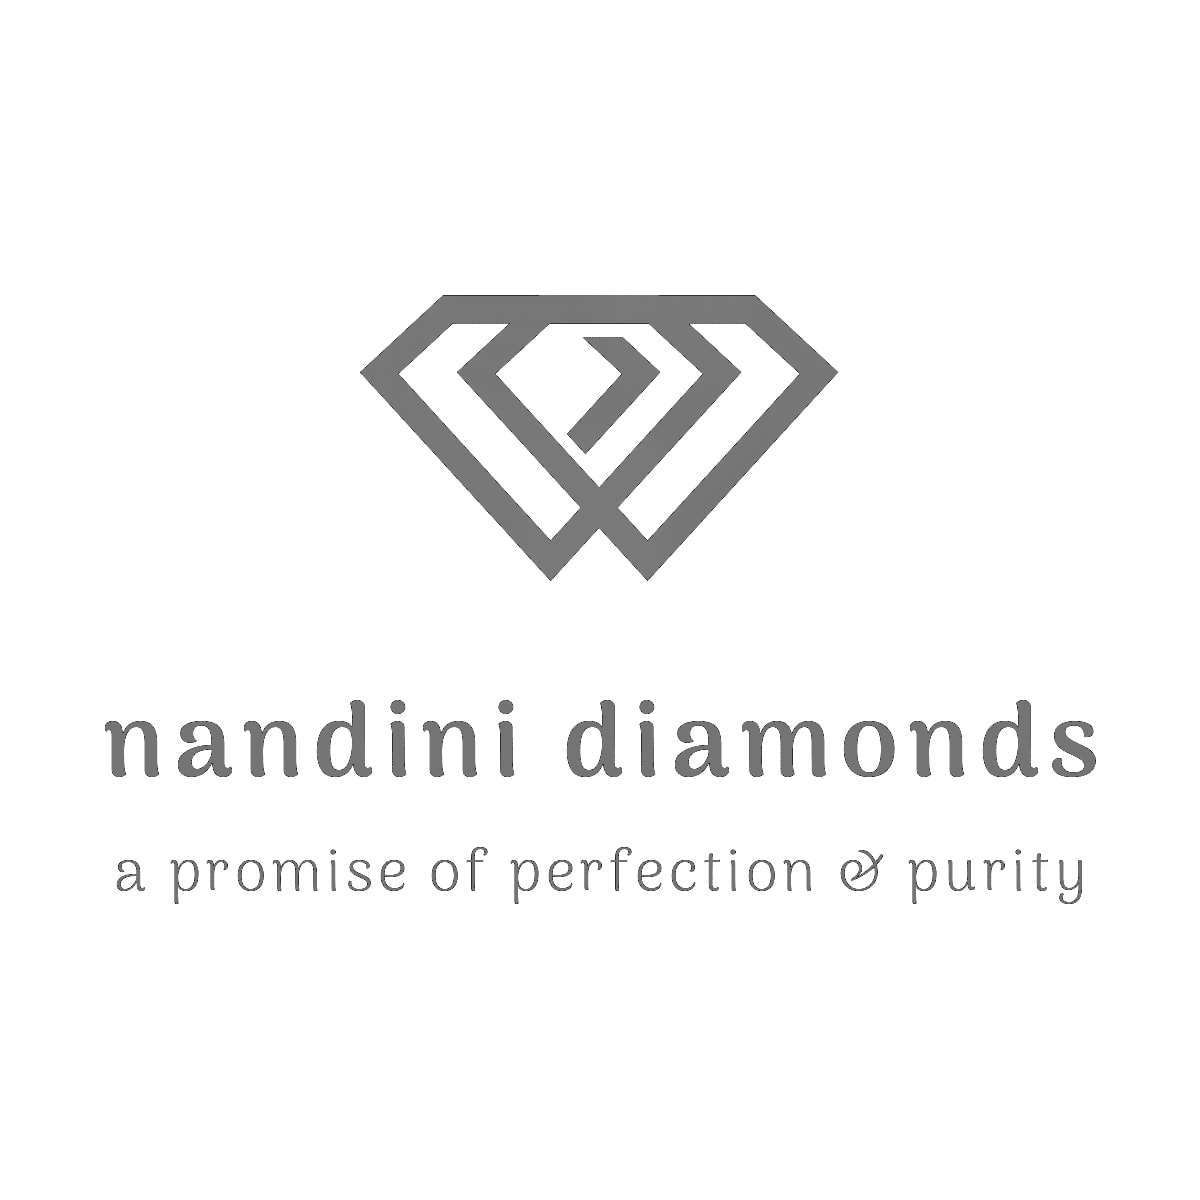 NANDINI DIAMONDS